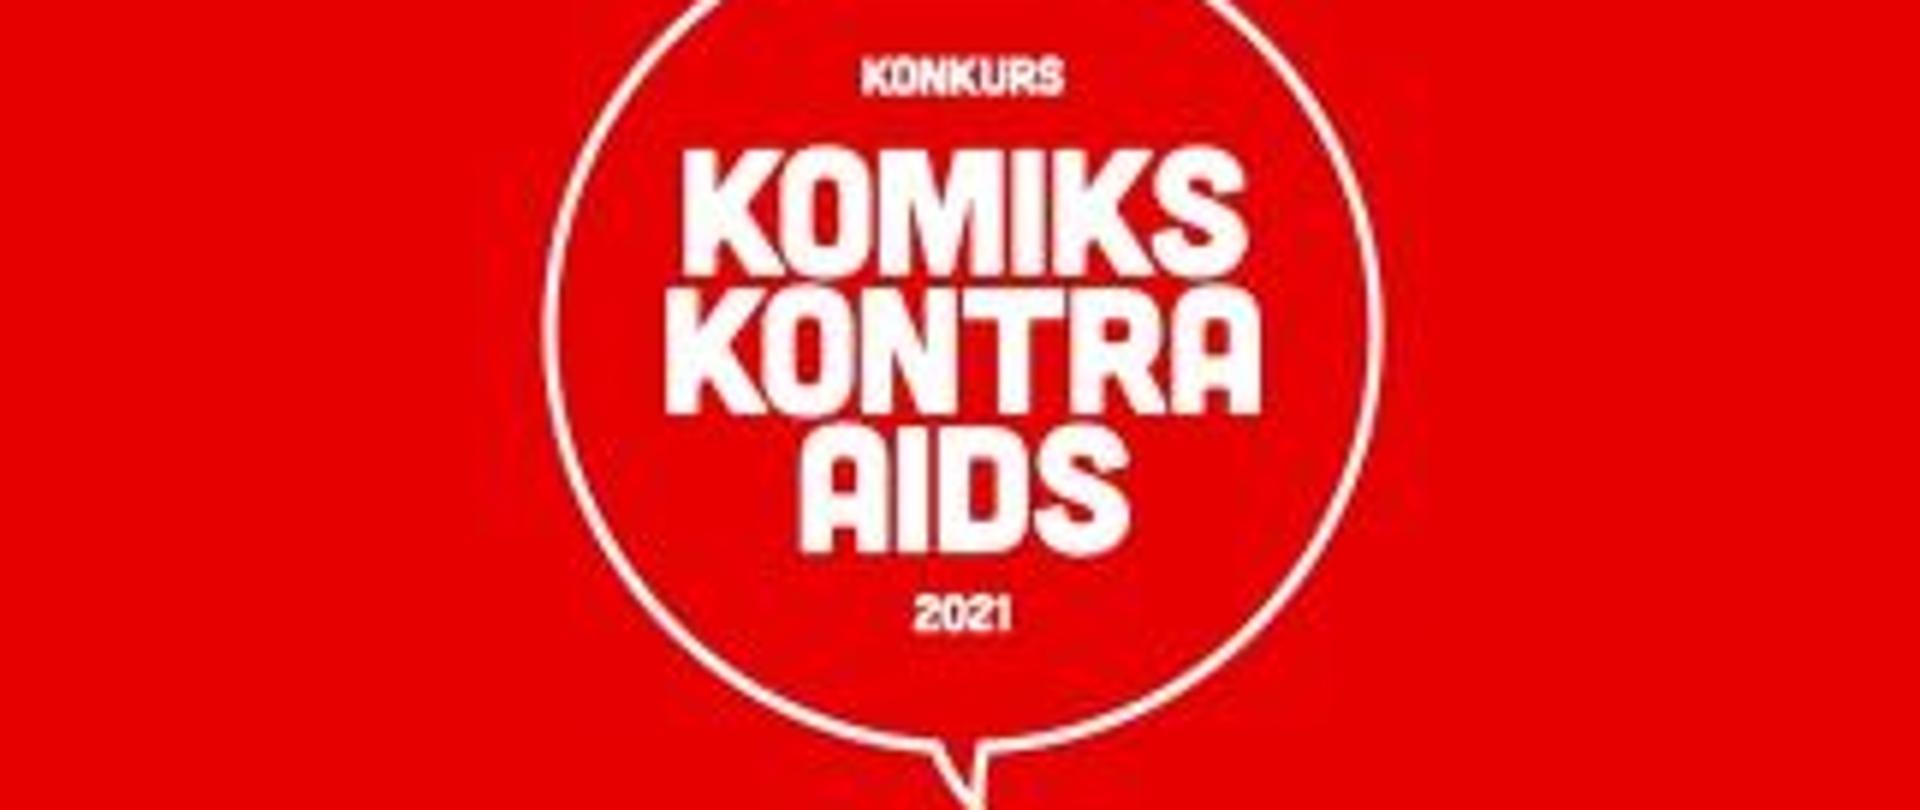 Konkurs "Komiks kontra AIDS 2021"